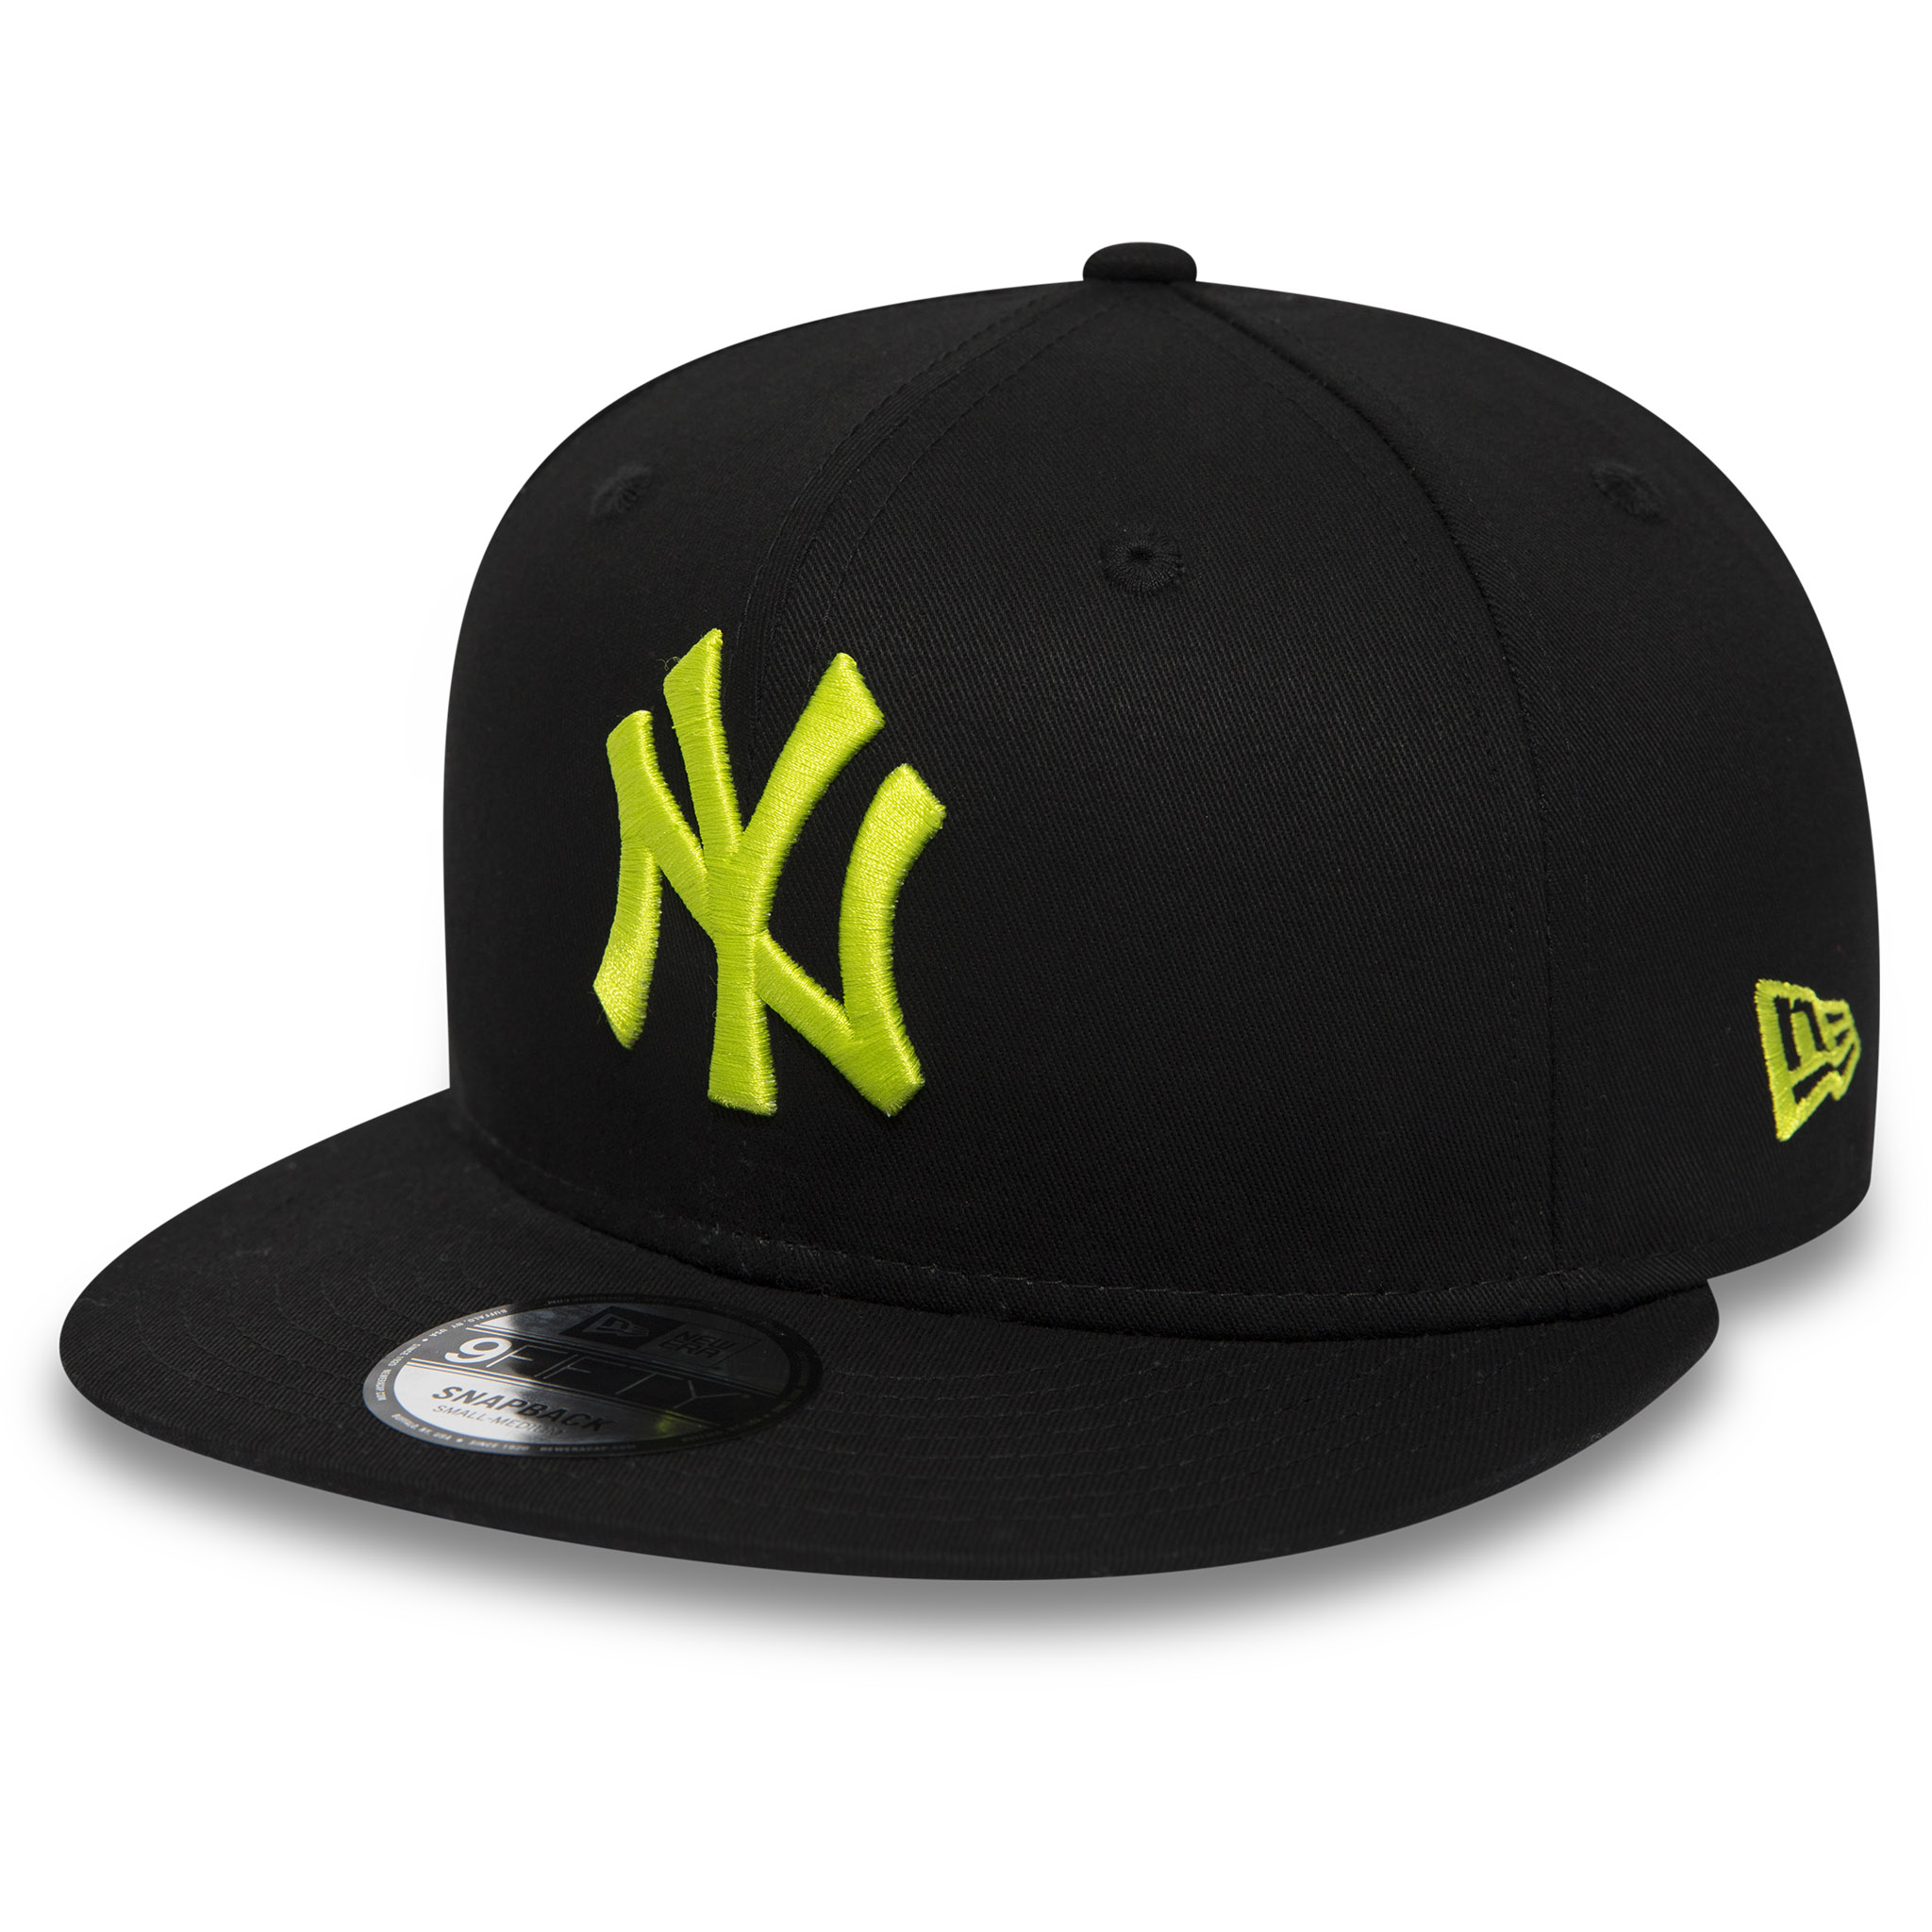 Cappellino 9FIFTY Essential New York Yankees nero